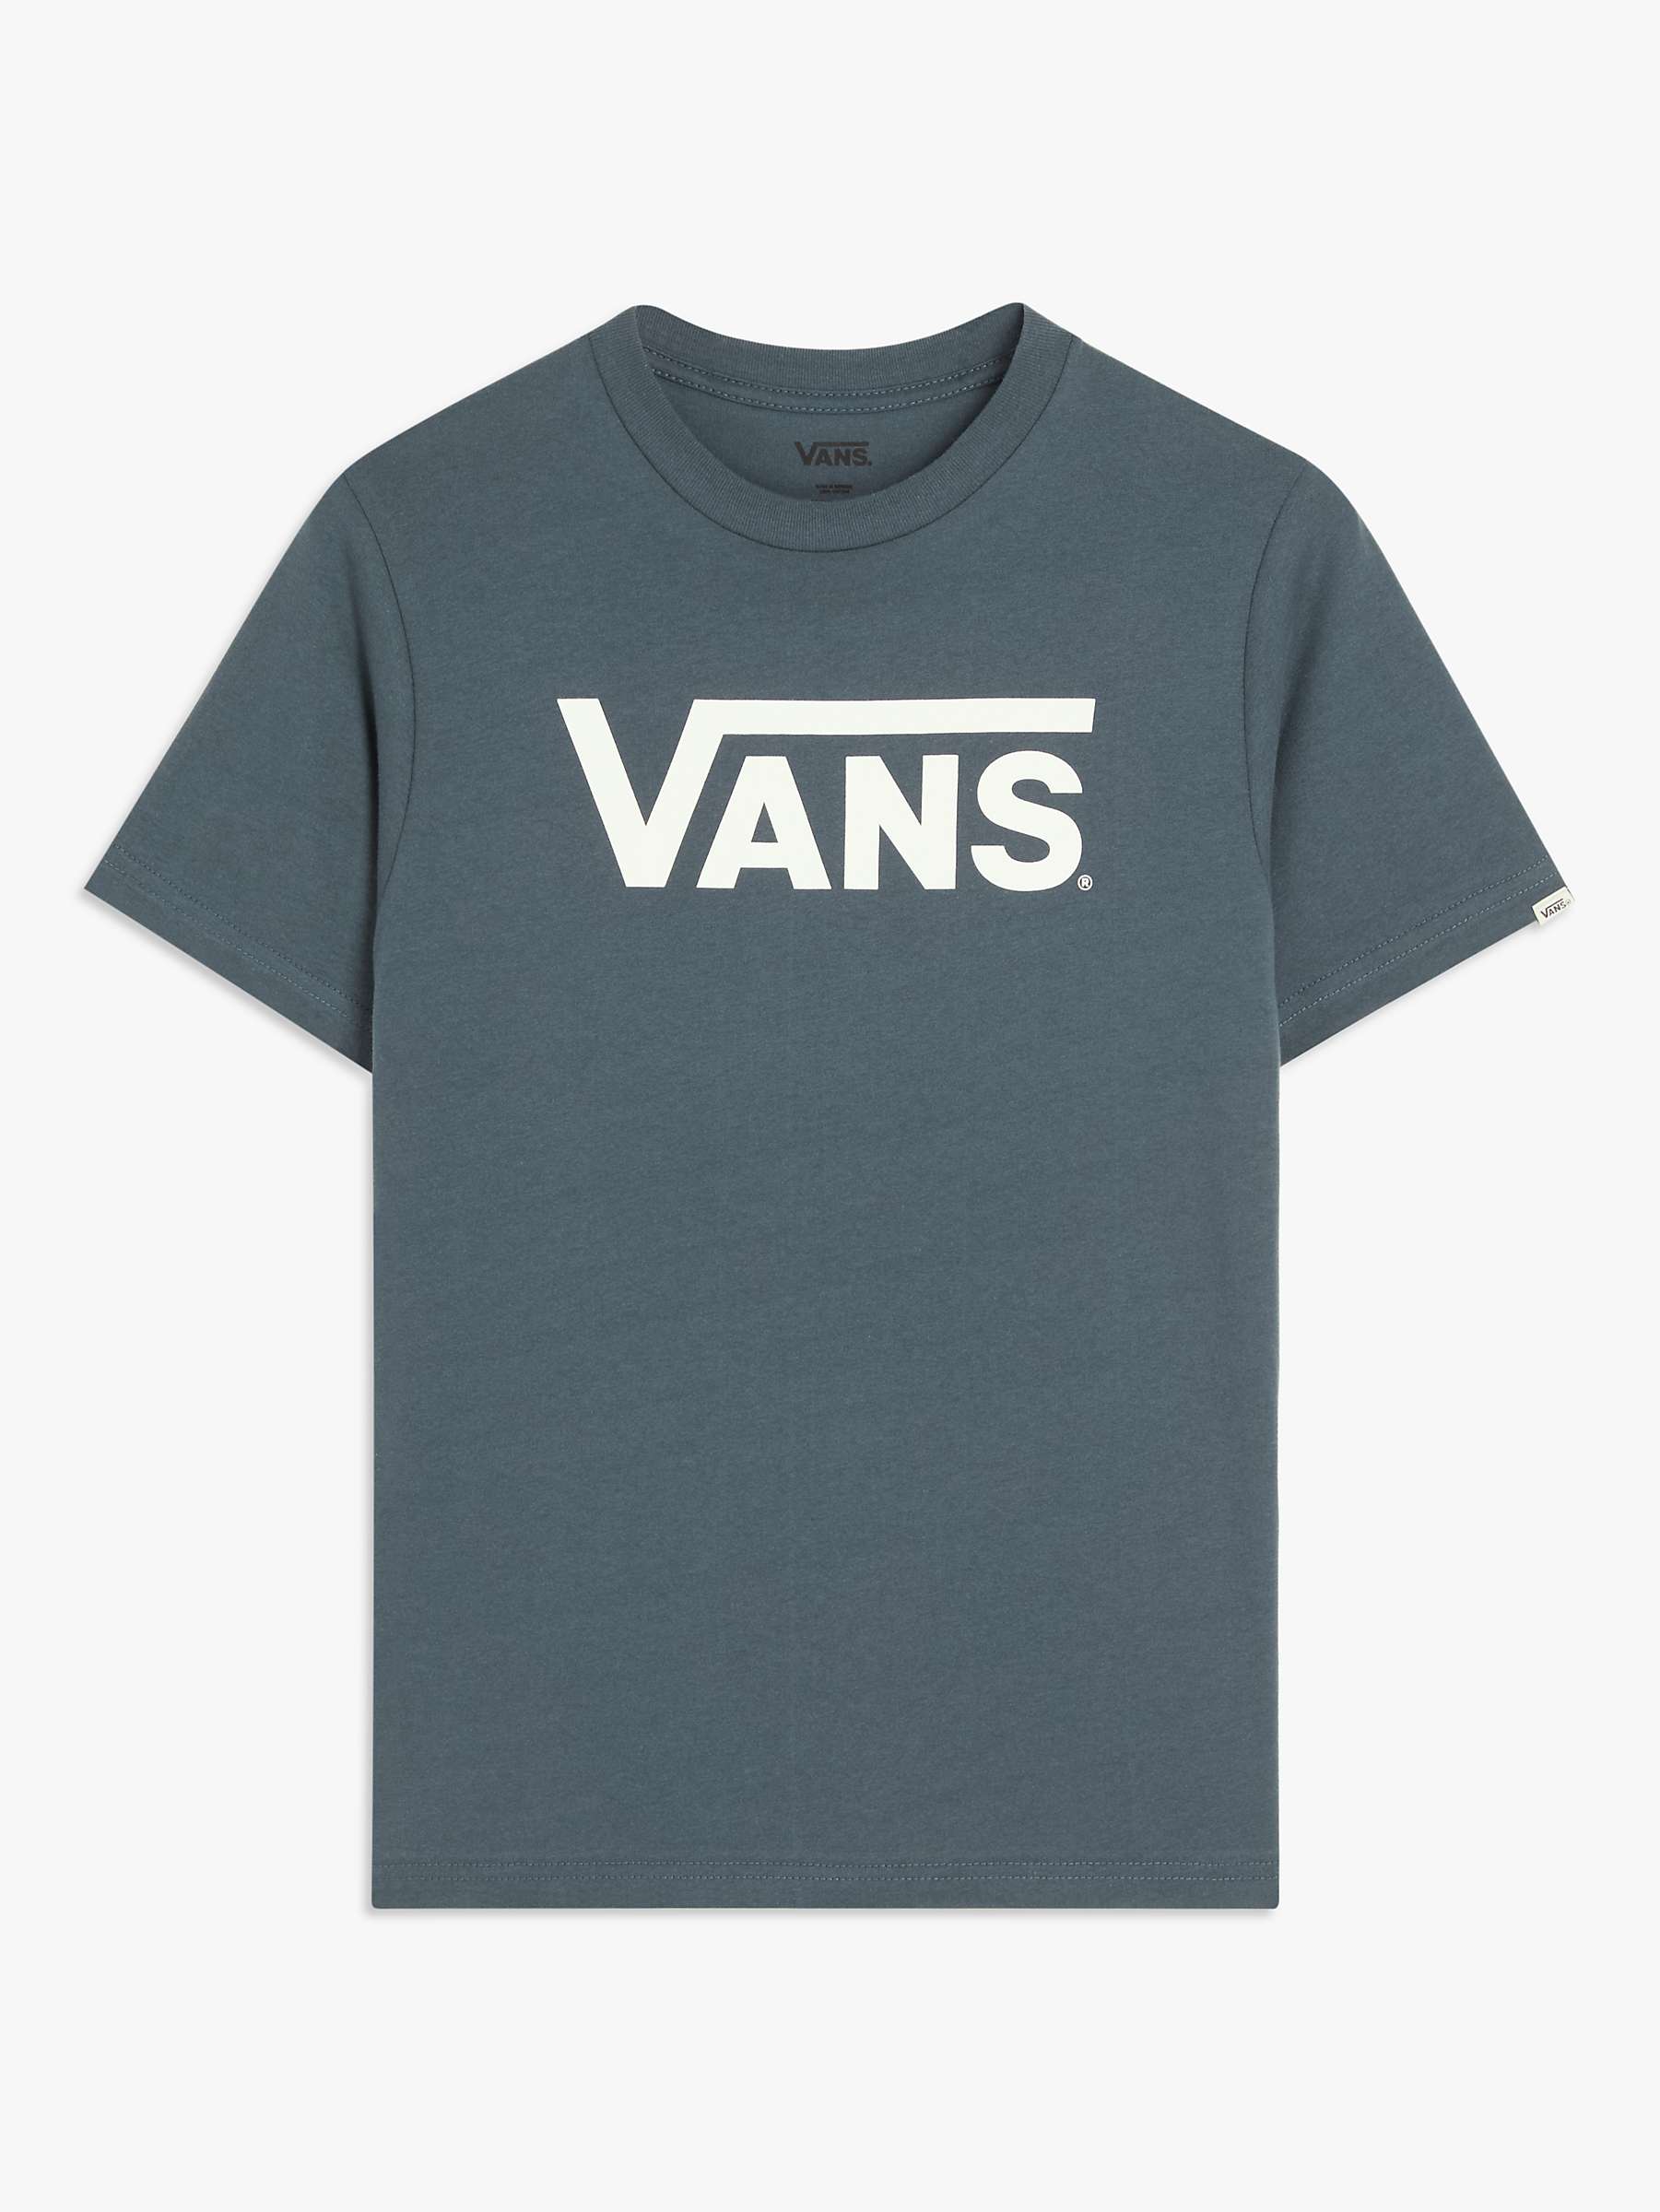 Buy Vans Kids' Classic Flying V Logo Short Sleeve T-Shirt Online at johnlewis.com